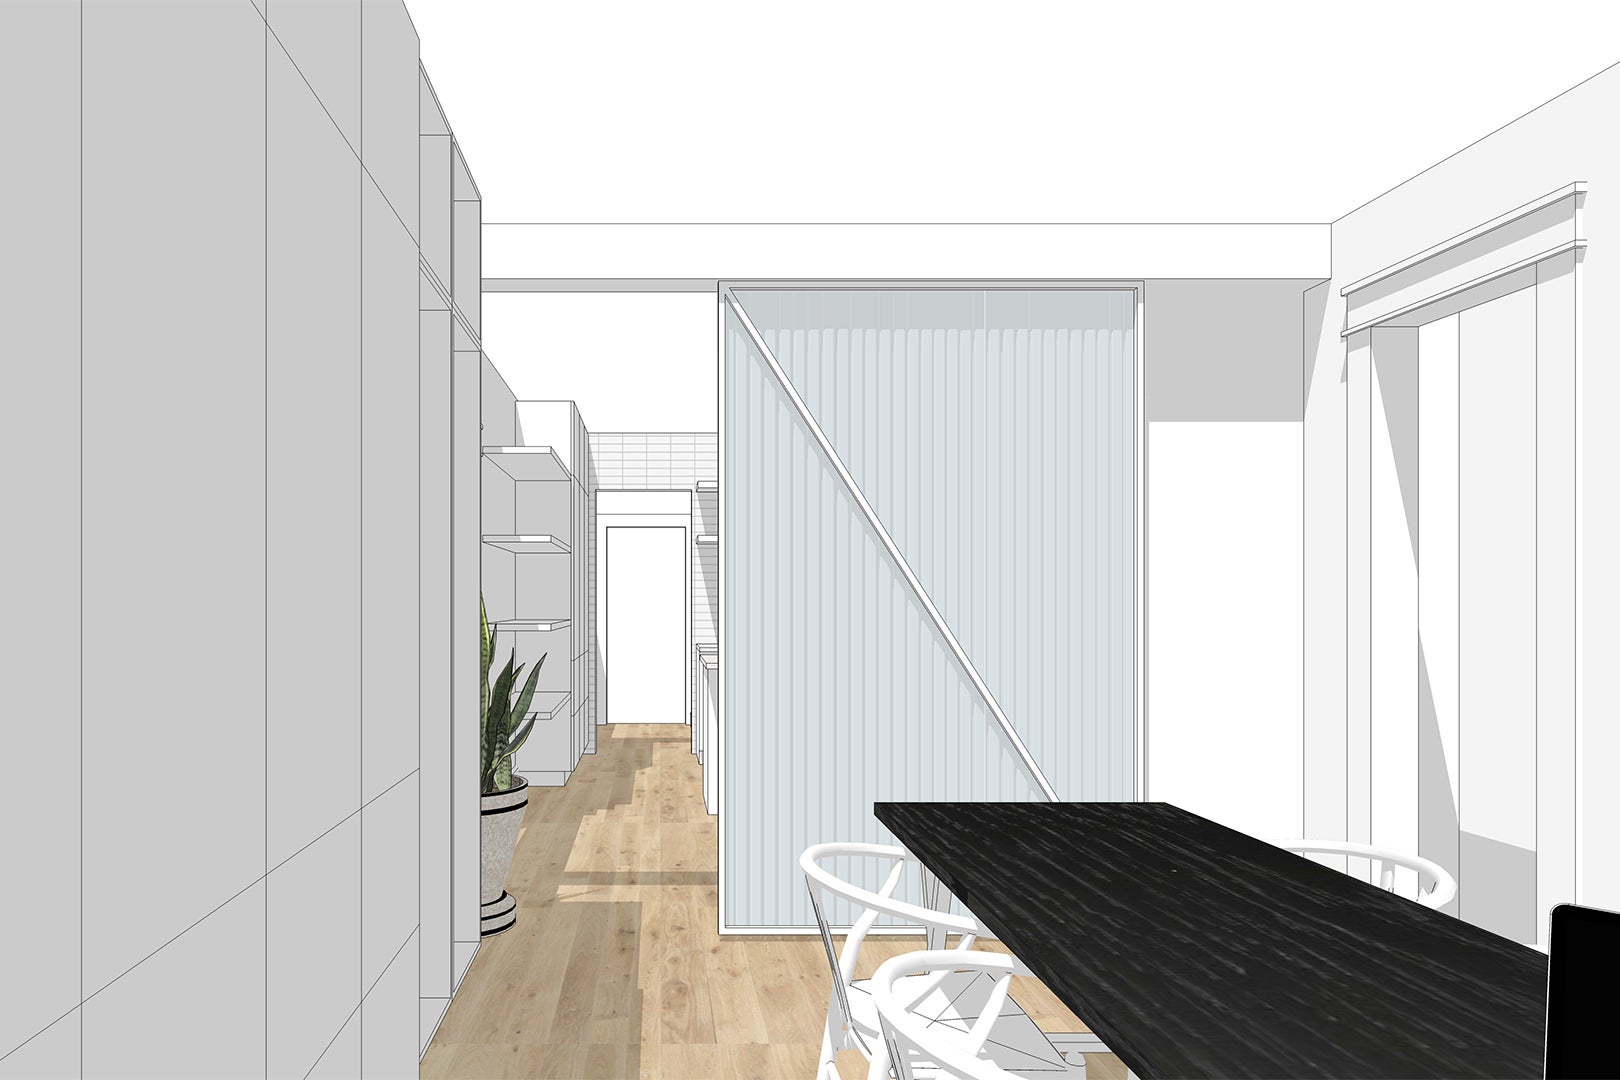 rendering plans of kitchen